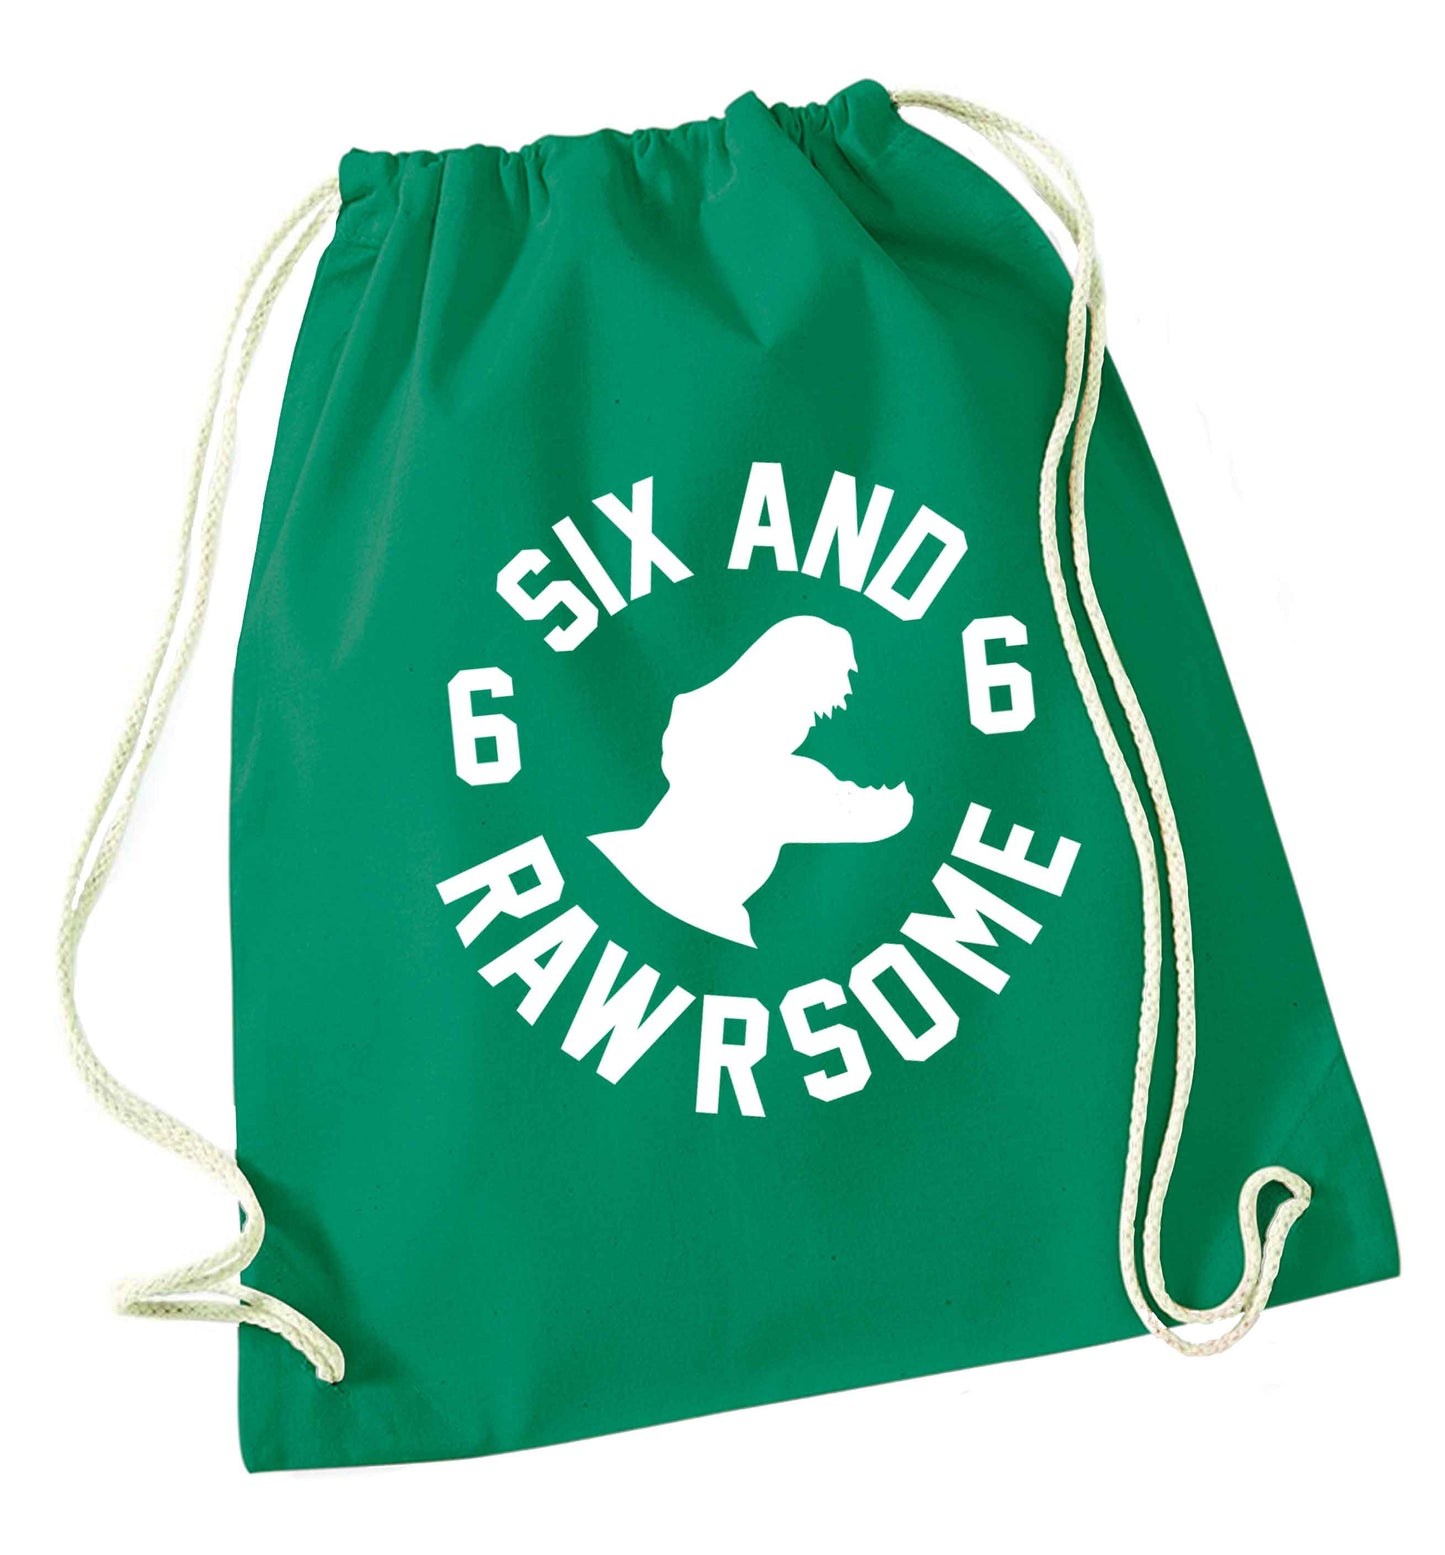 Six and rawrsome green drawstring bag